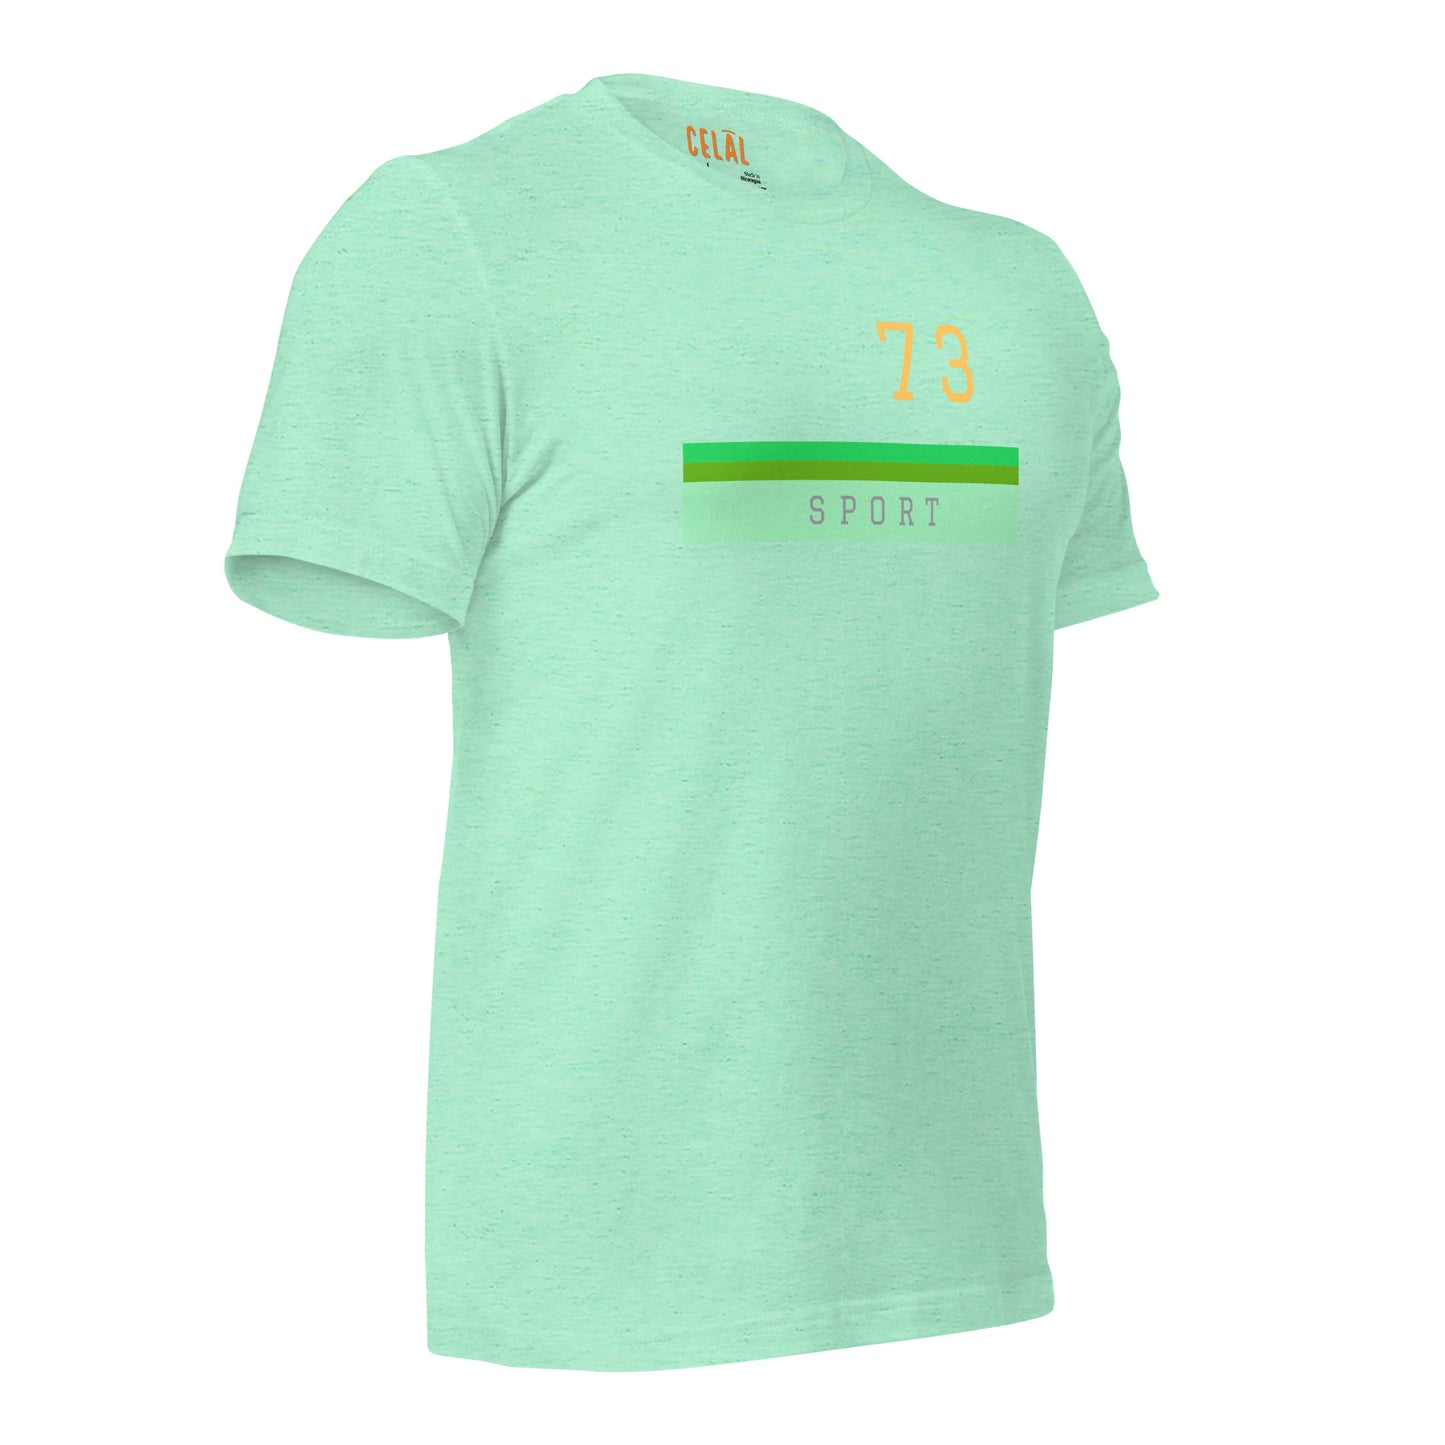 73 Unisex t-shirt